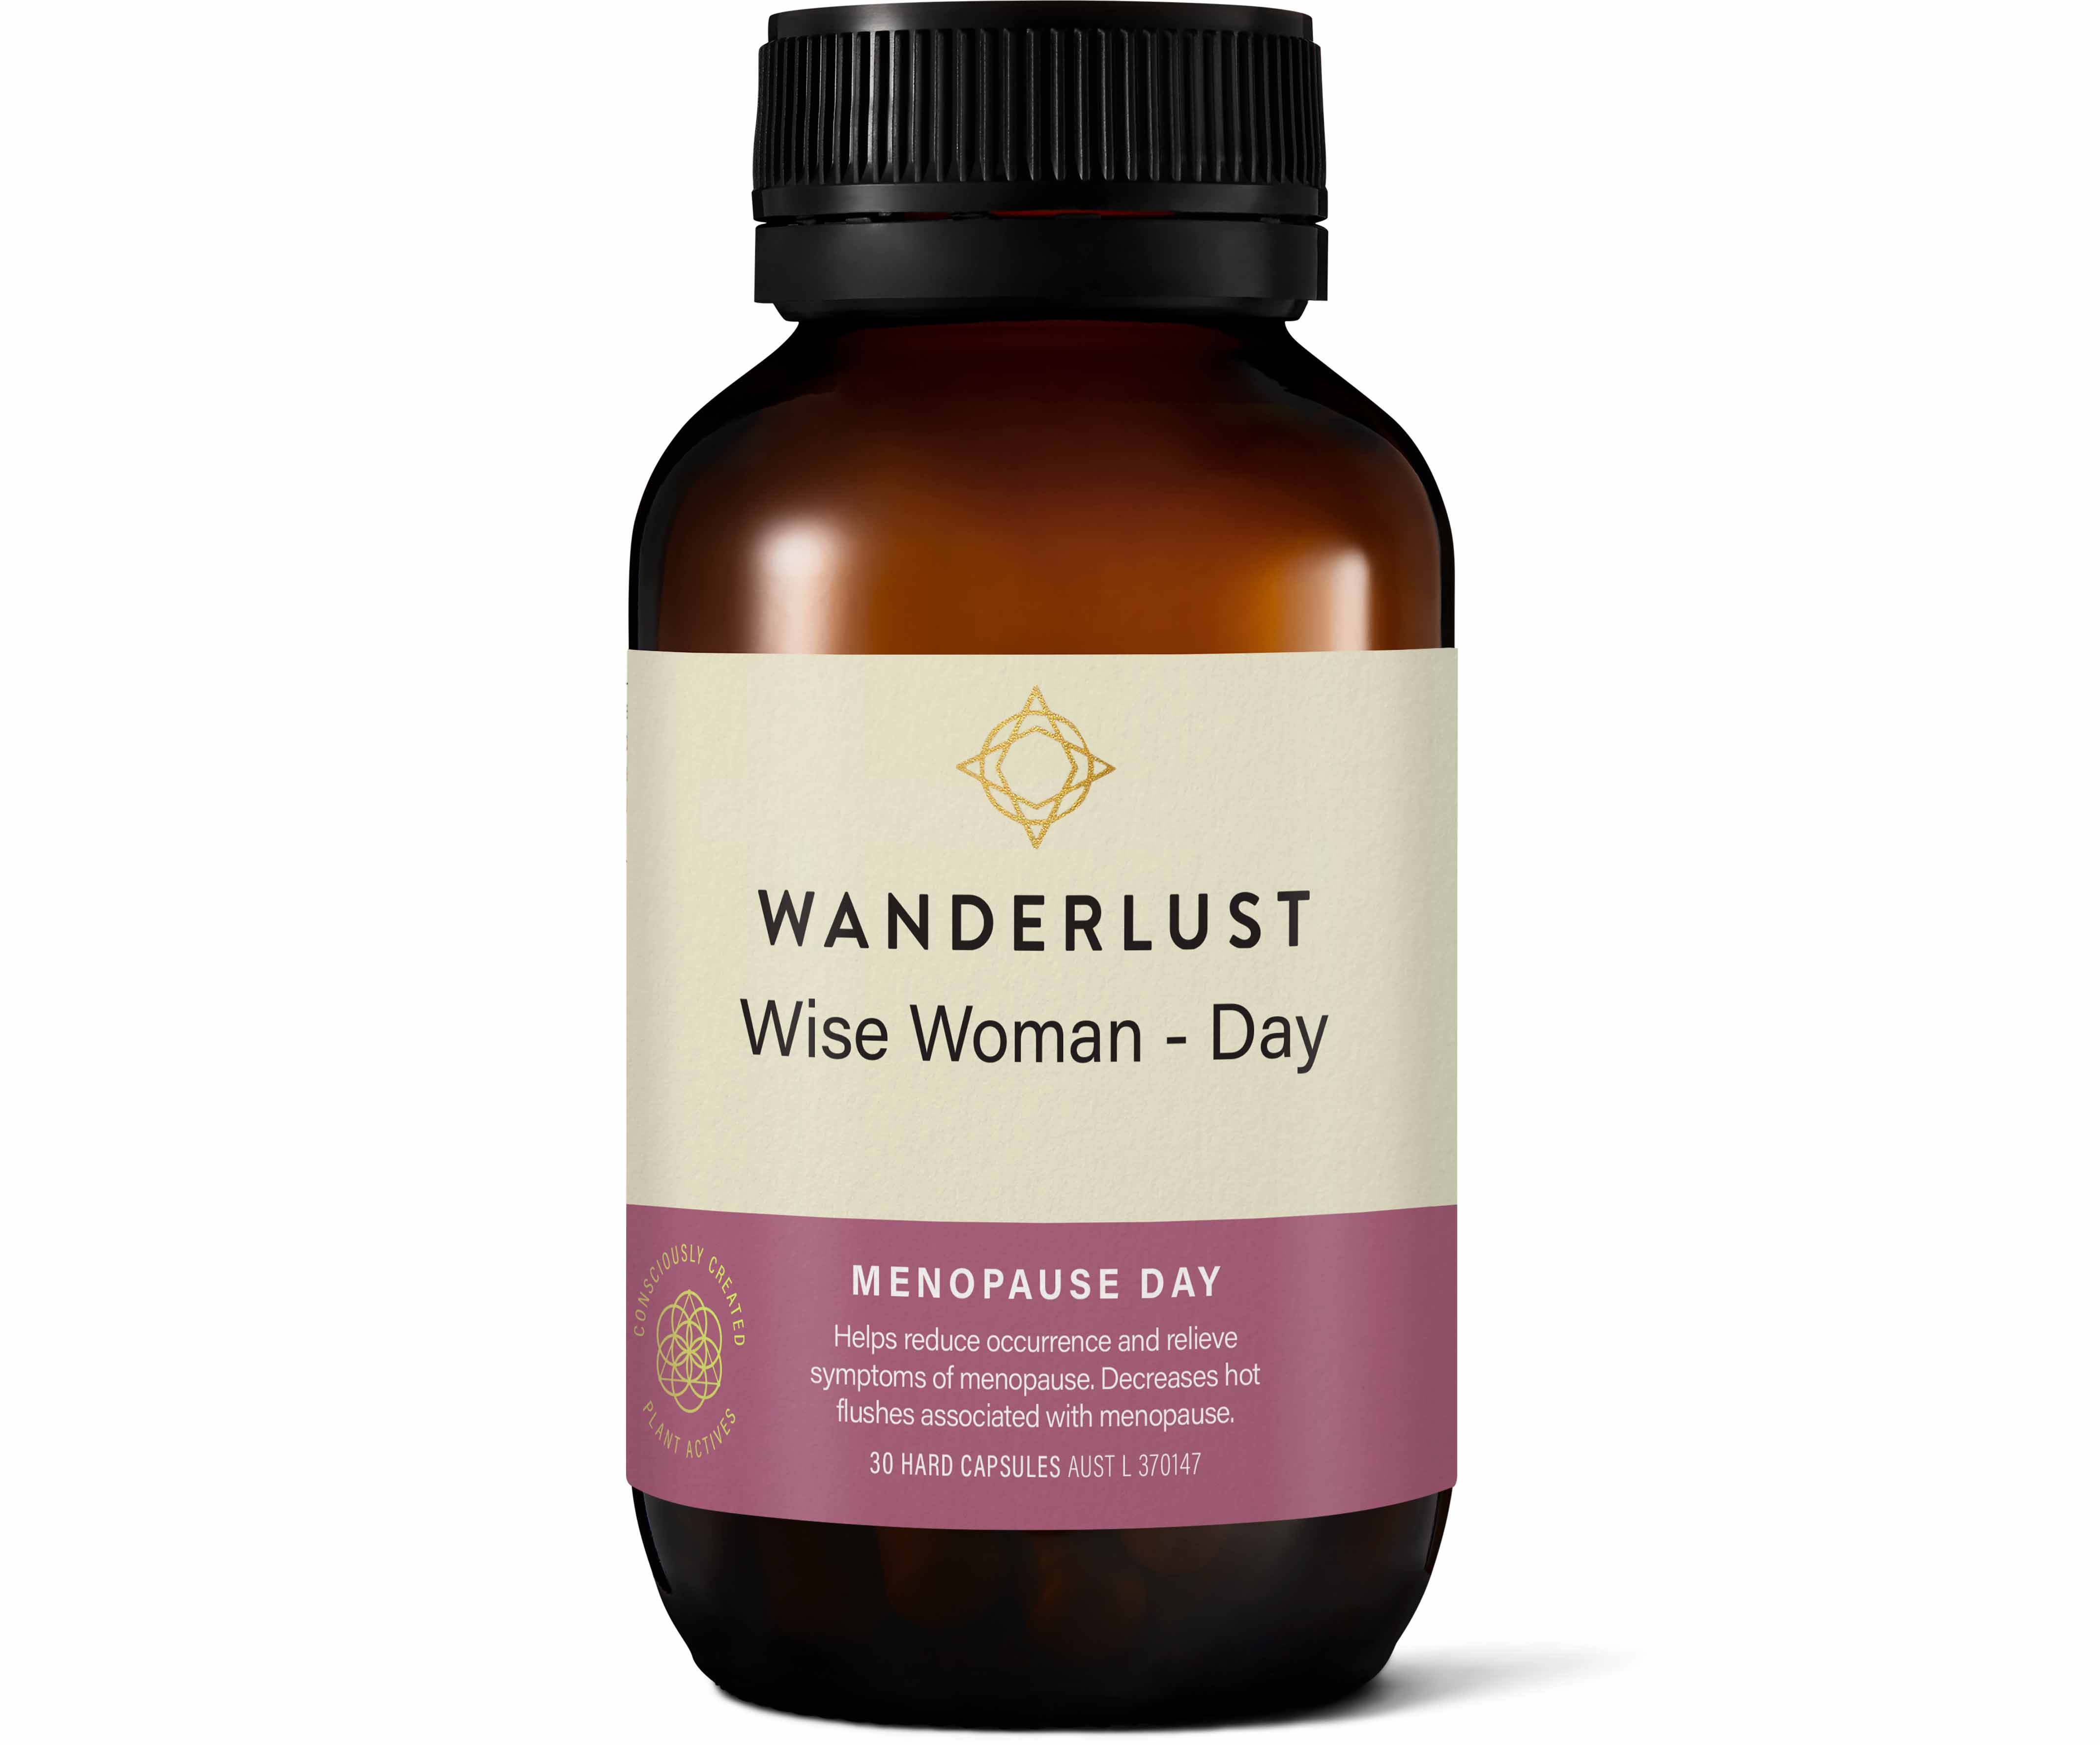 Wanderlust - Wise Woman - Day